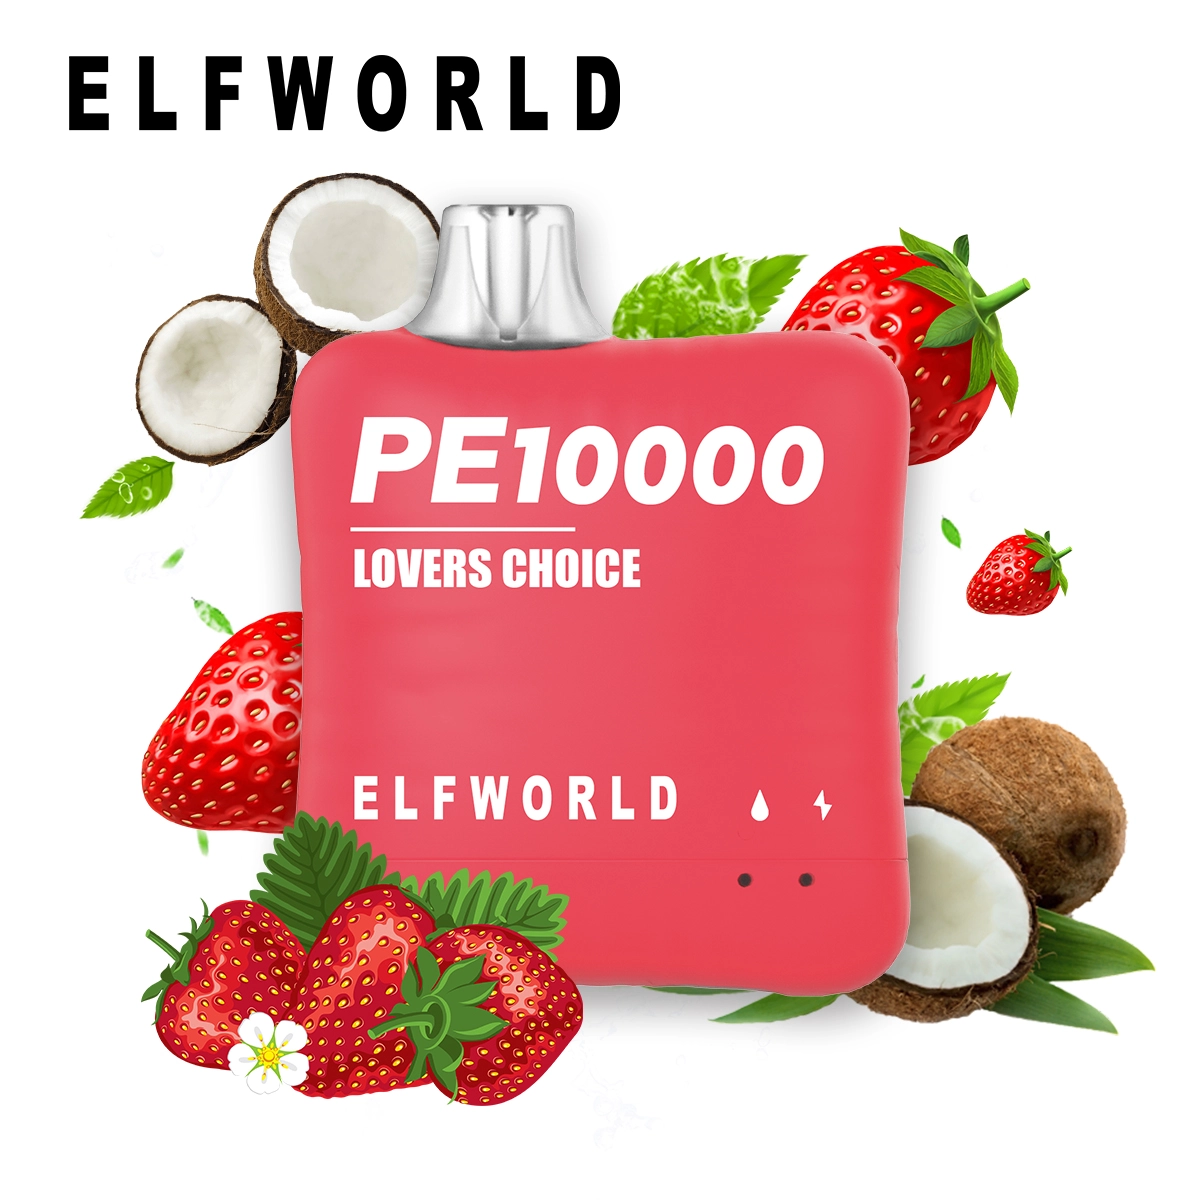 Lovers Choice ELF WORLD PE 10000